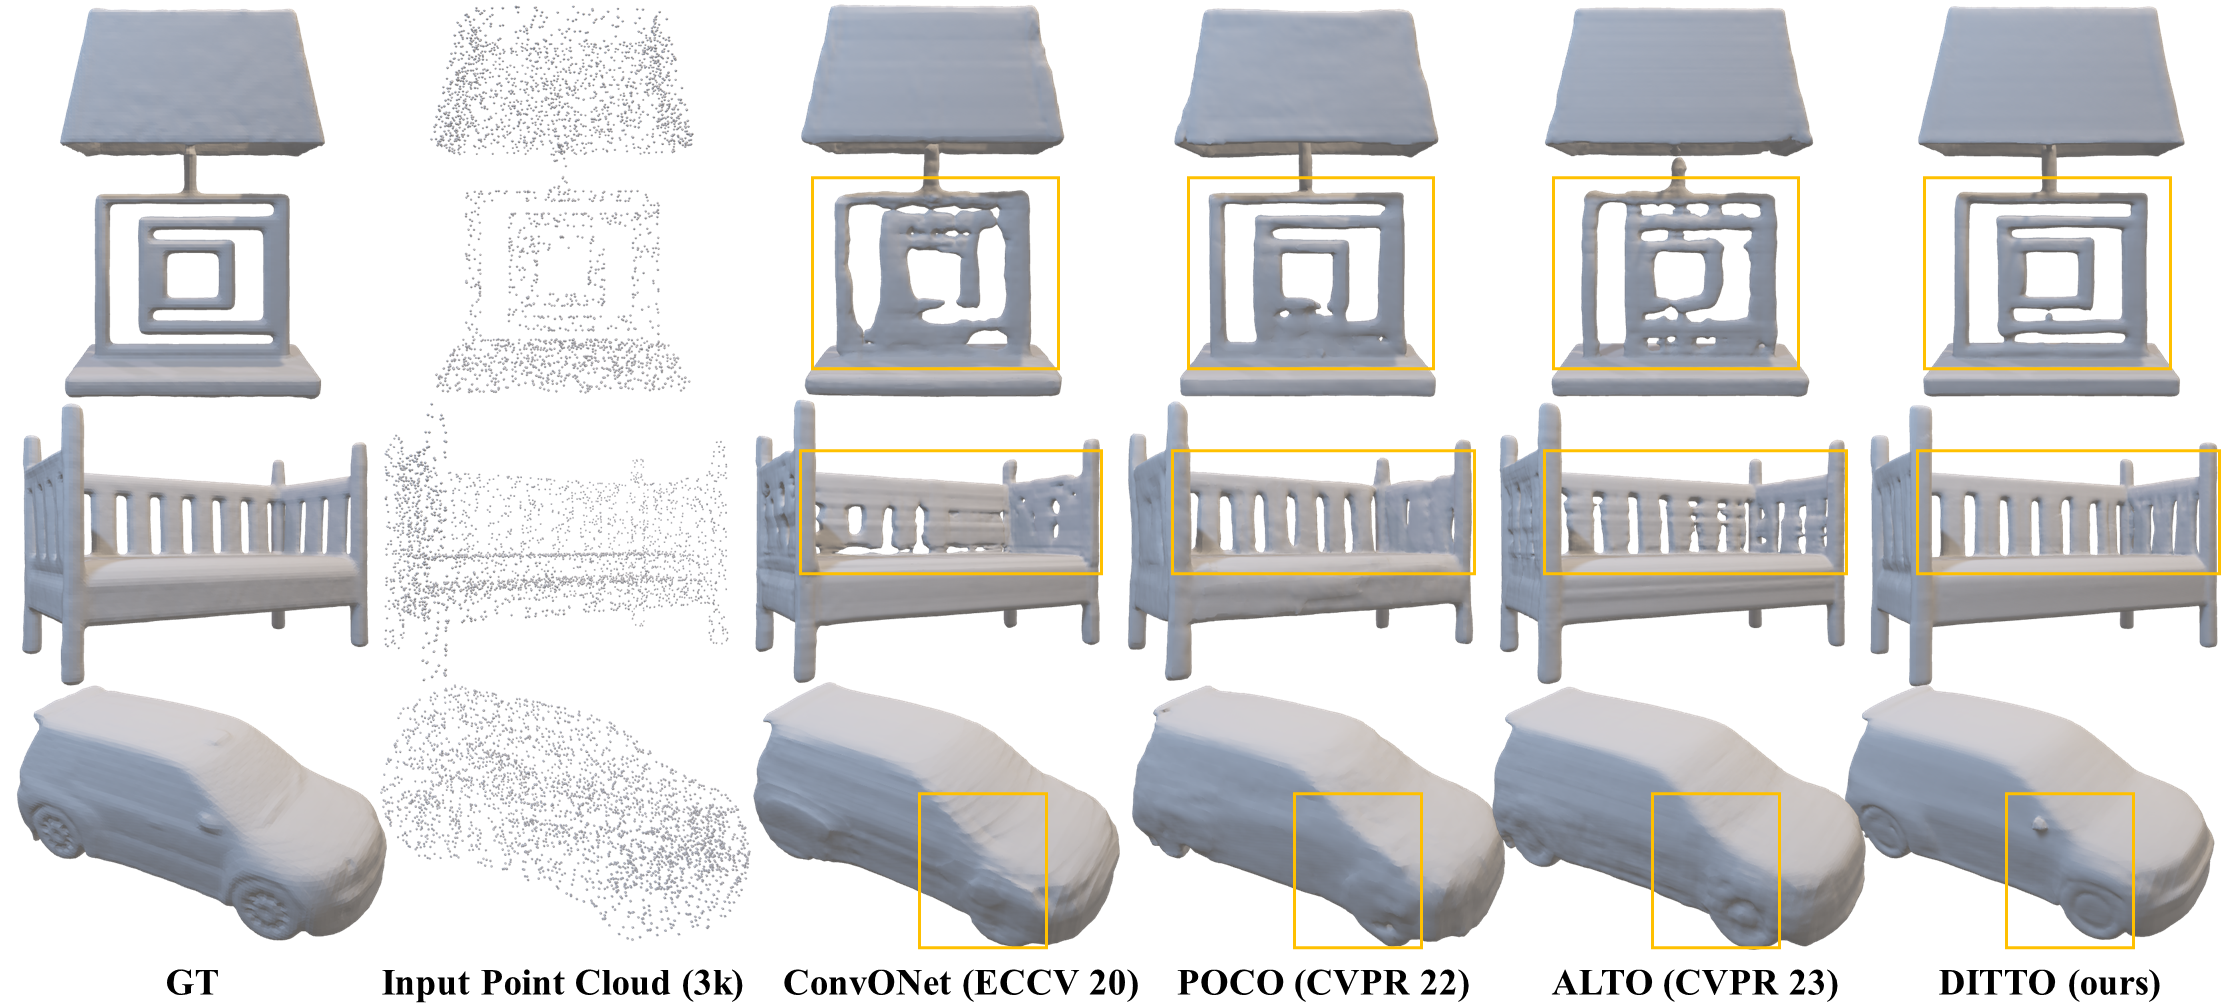 Figure 3. Object-level 3D reconstruction comparison on ShapeNet with 3K input points.